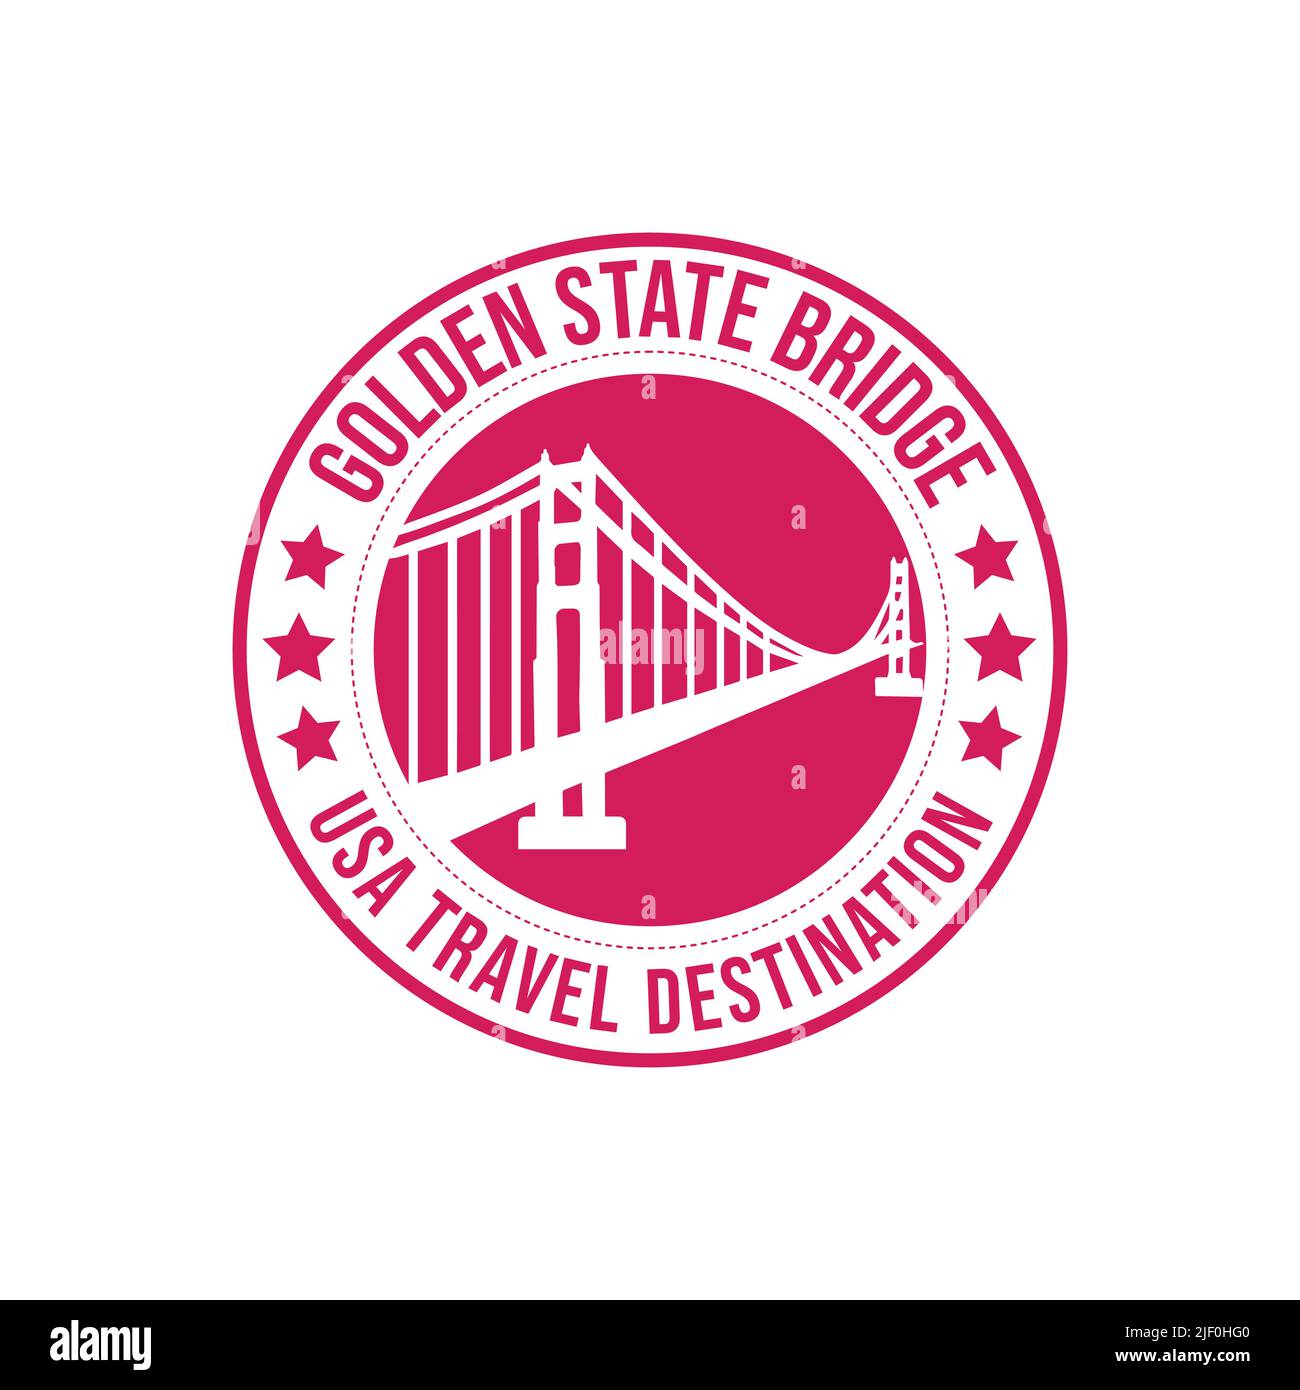 Rubber stamp with the text Golden state bridge travel destination written inside the stamp. America historical bridge architecture travel destination Stock Vector